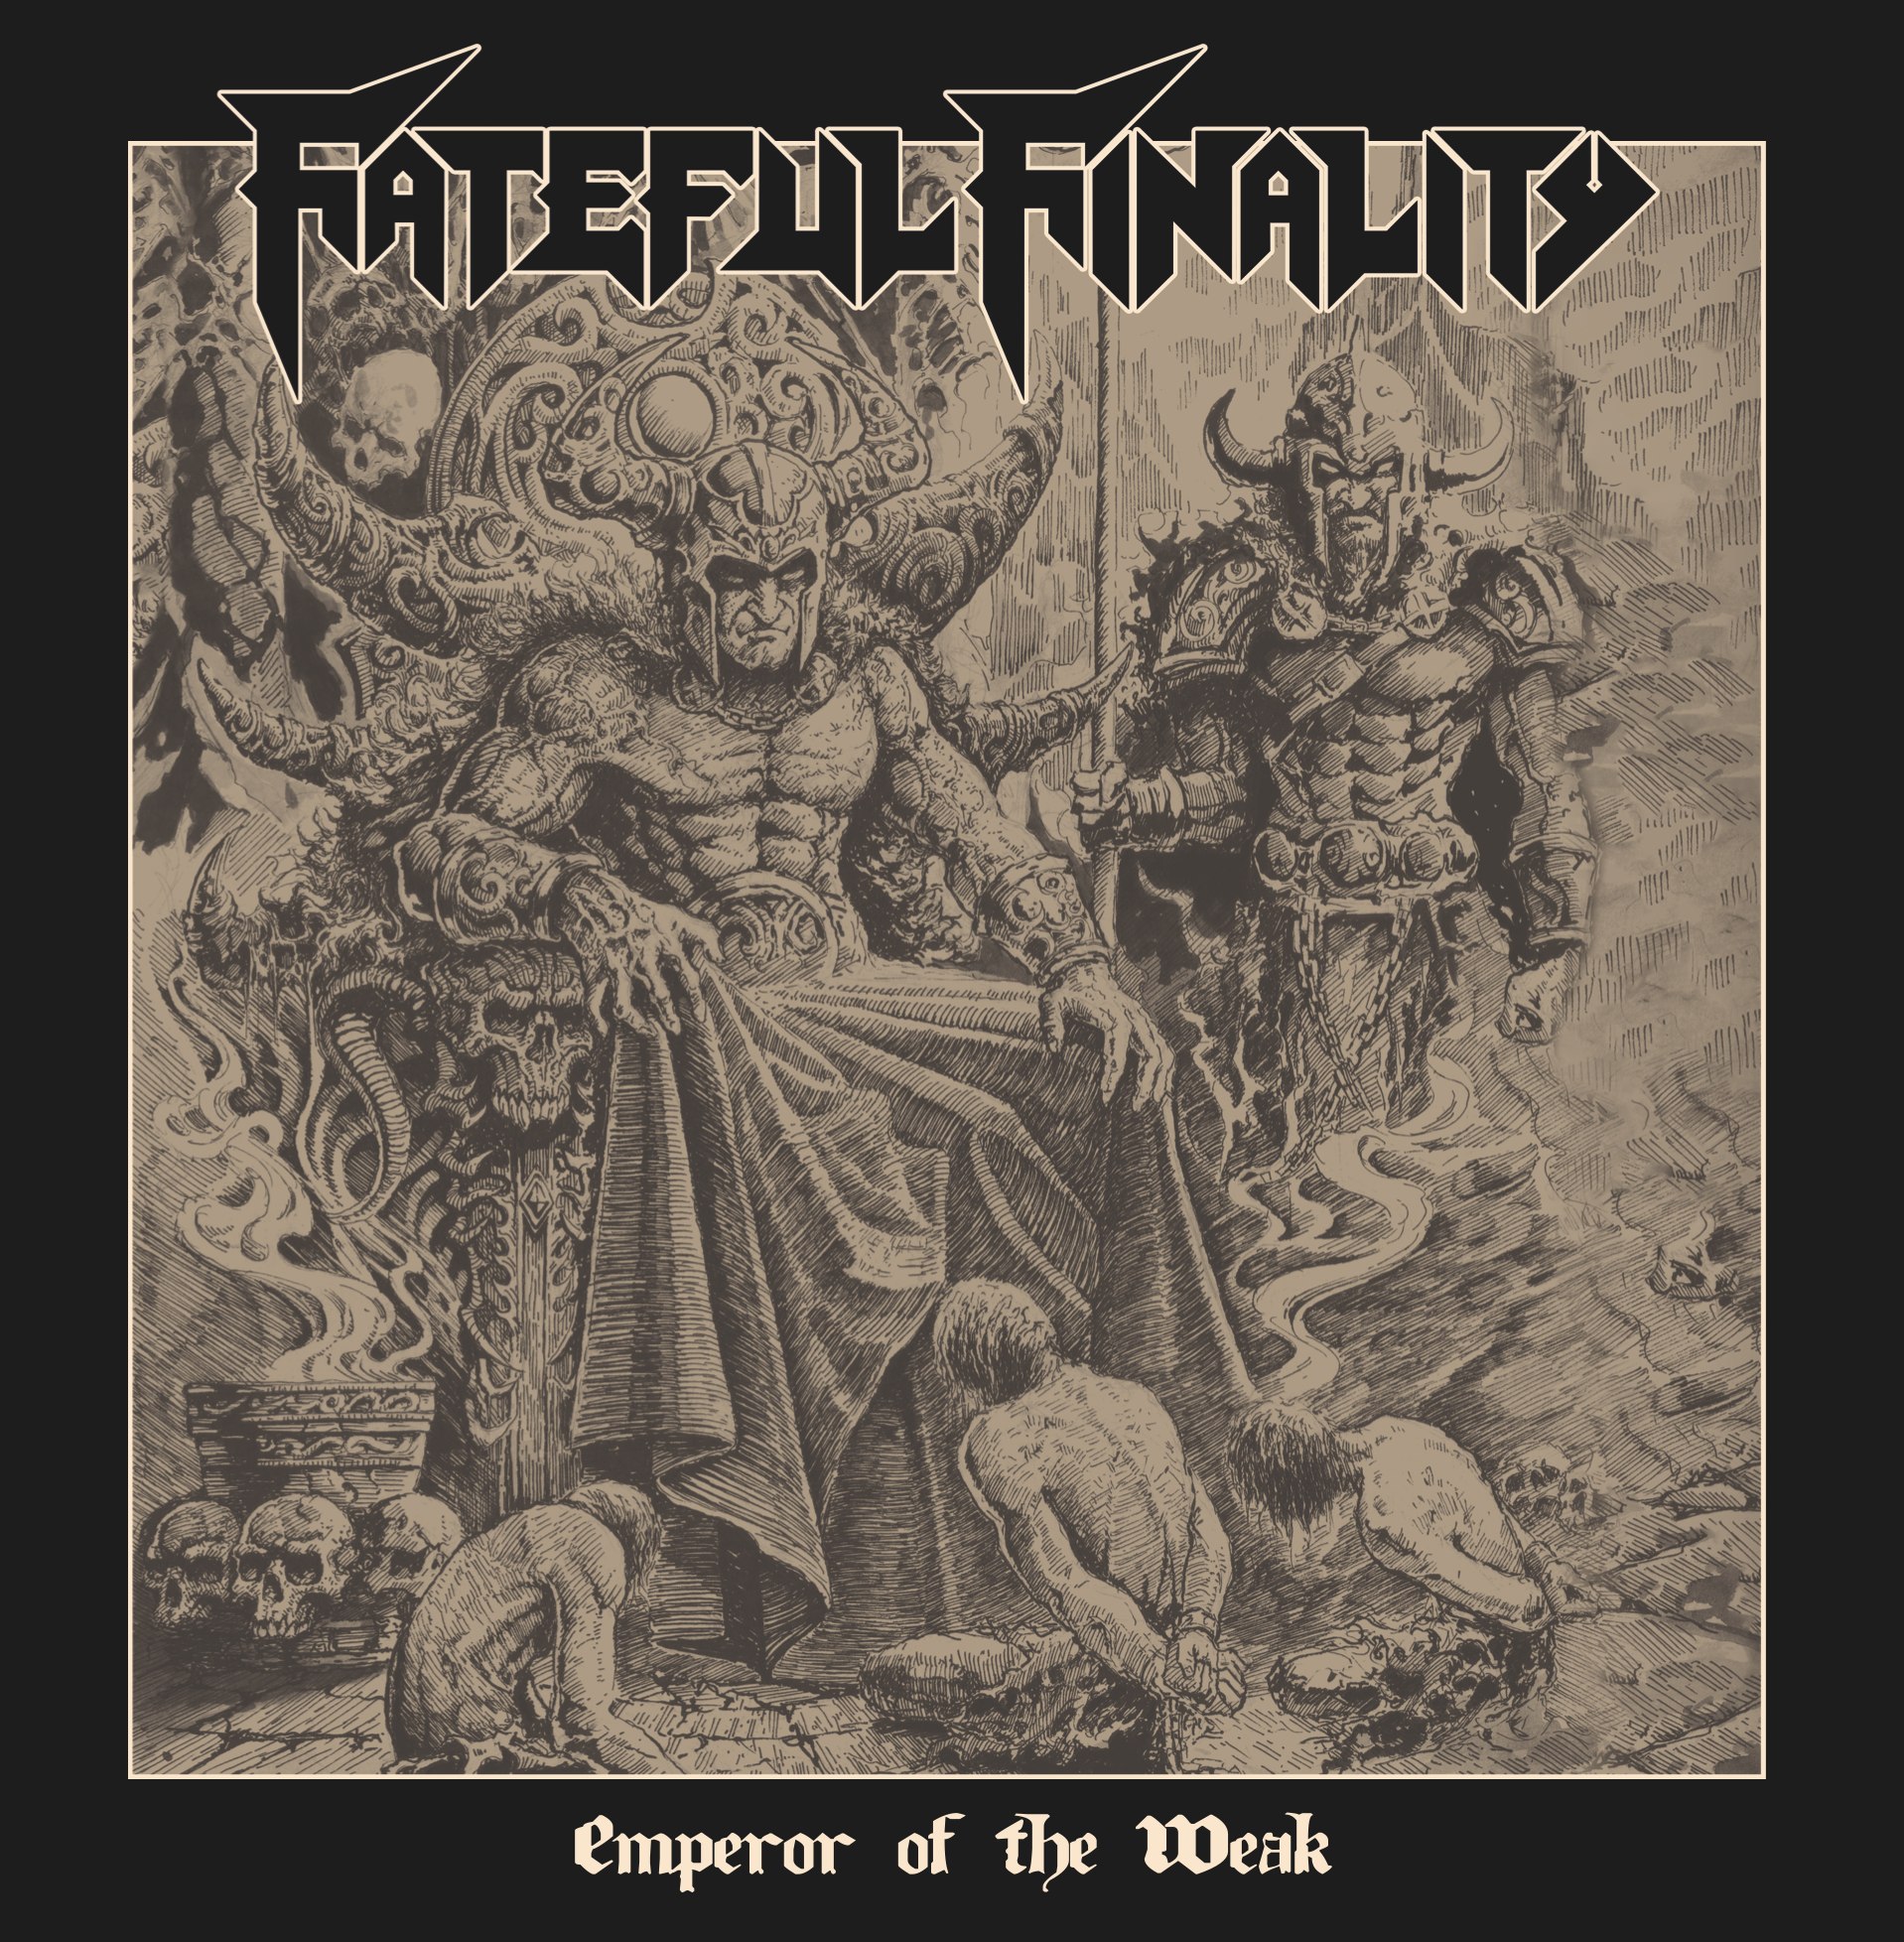 Vinyl - Emperor of the Weak - Vorbestellung! - Fateful Finality